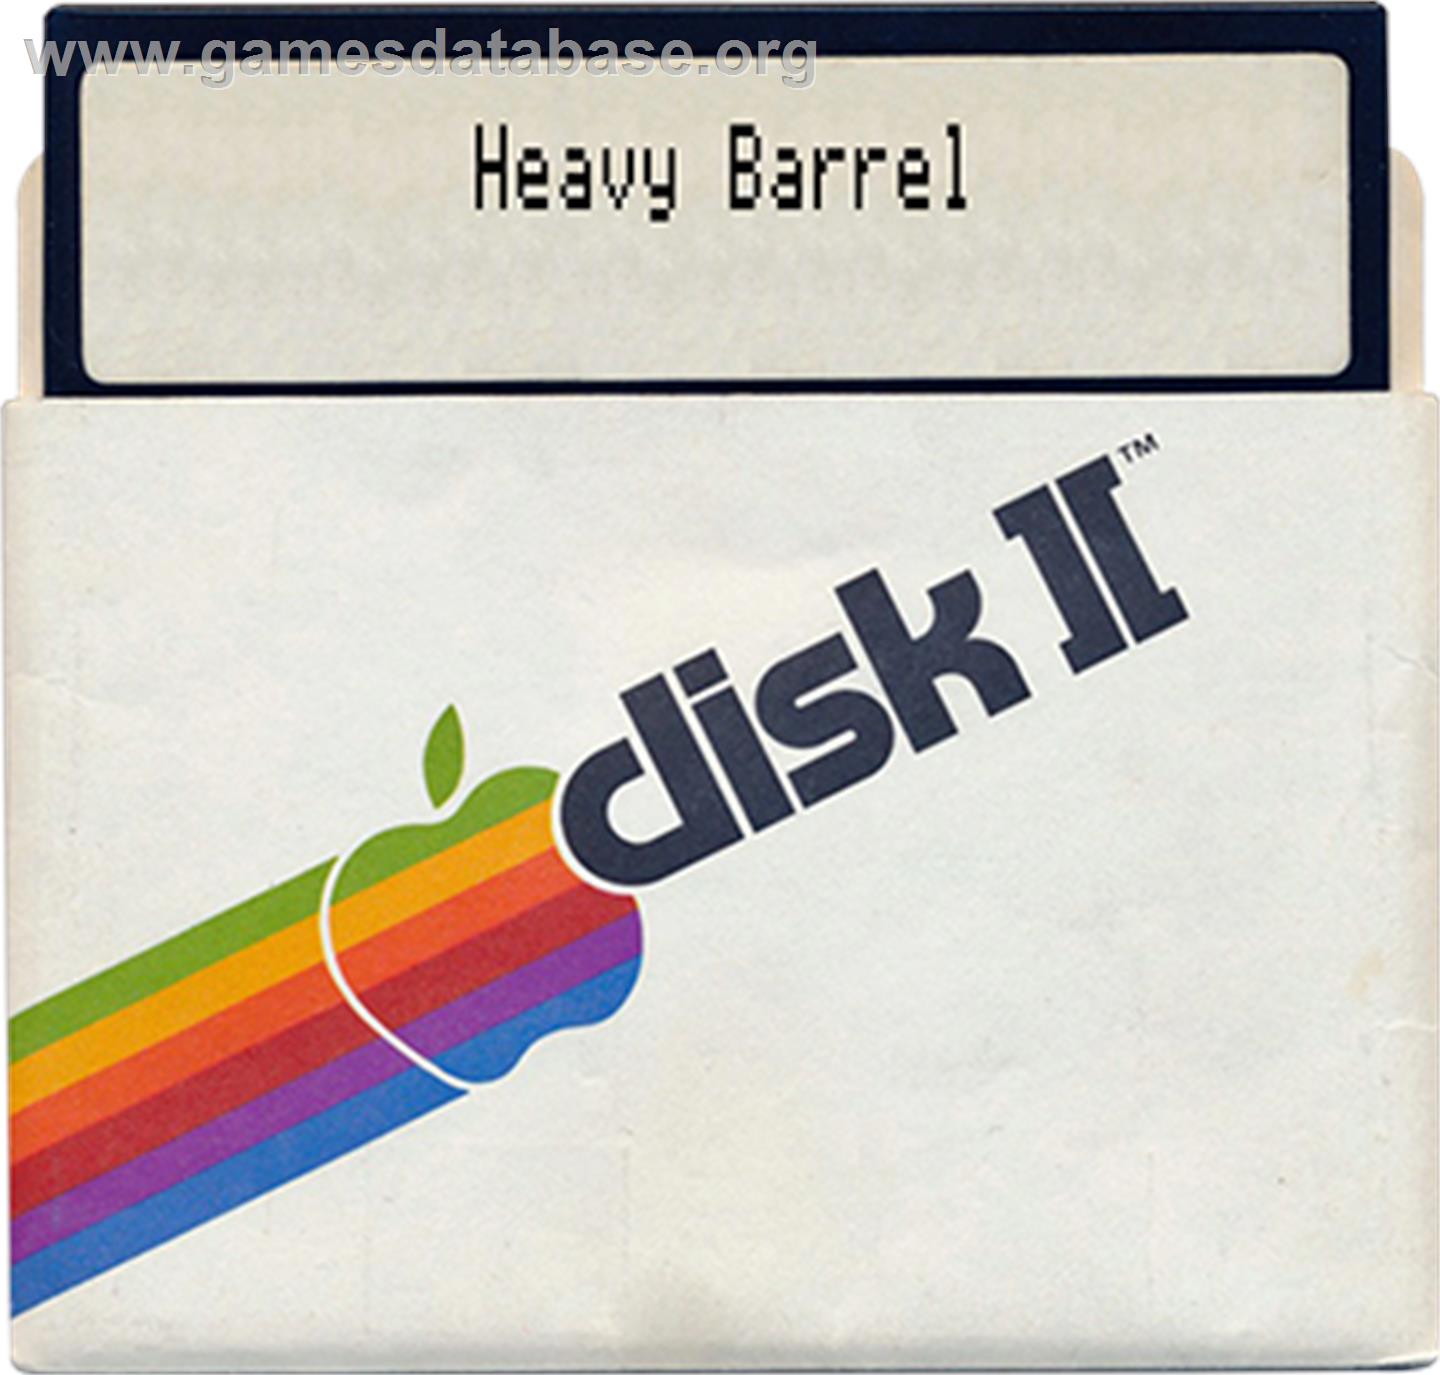 Heavy Barrel - Apple II - Artwork - Disc